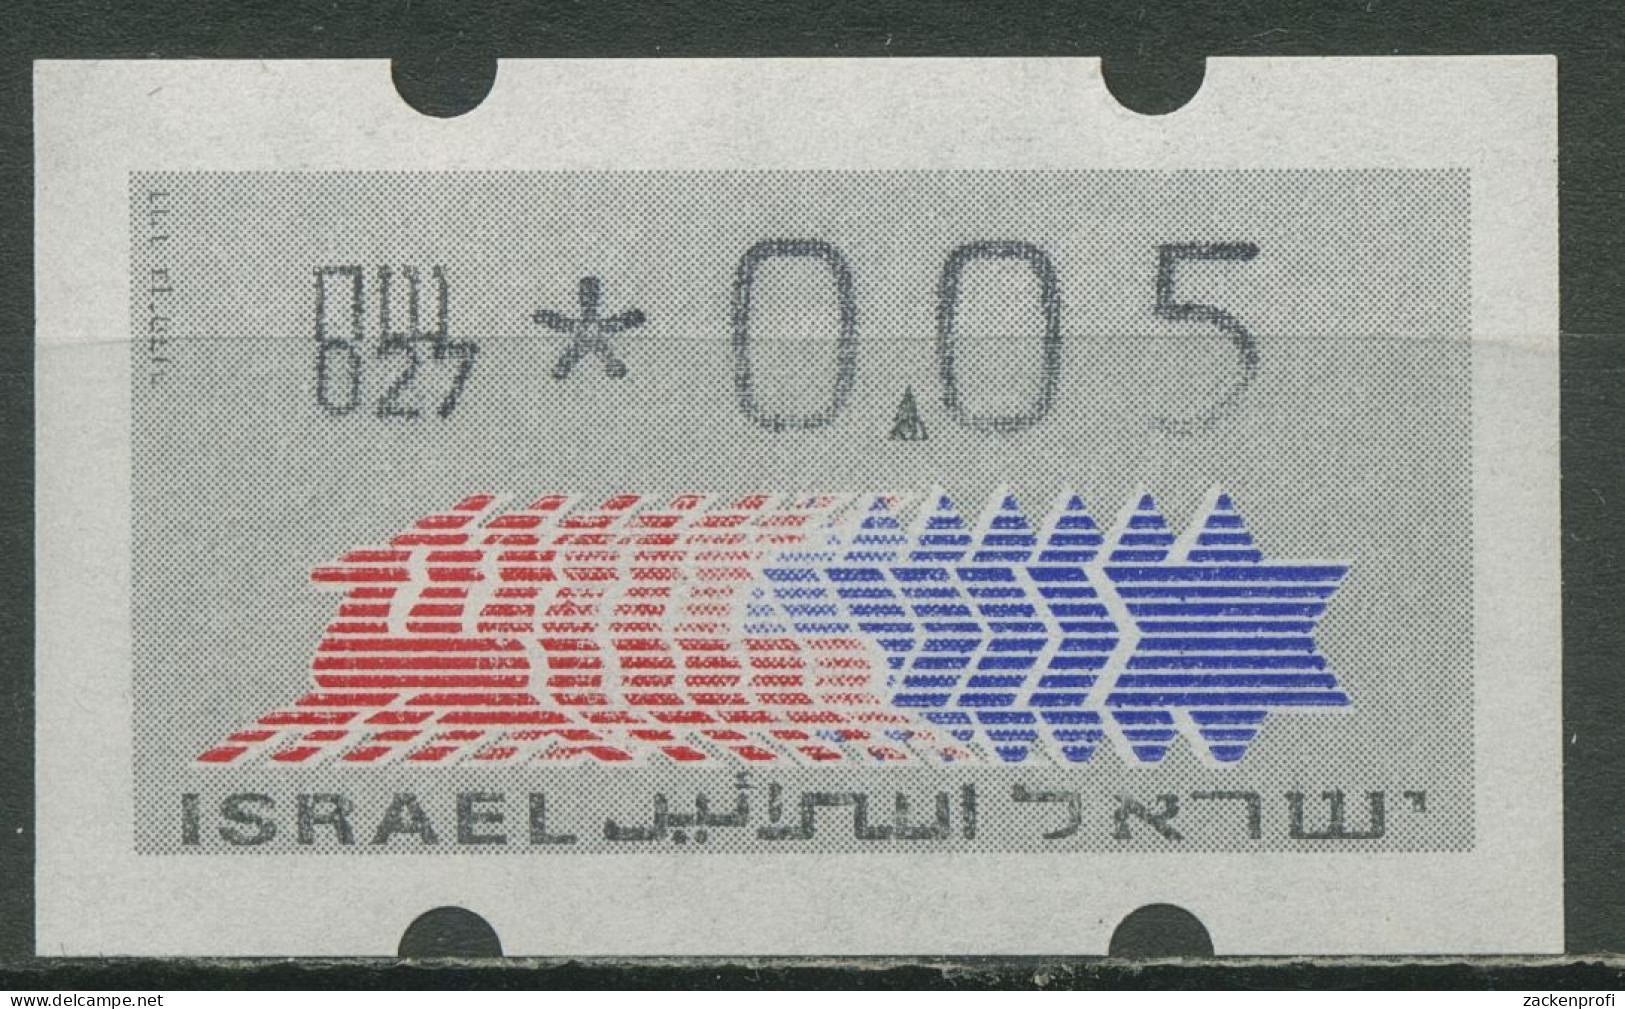 Israel ATM 1990 Hirsch Automat 027 Einzelwert ATM 3.4.27 Postfrisch - Vignettes D'affranchissement (Frama)